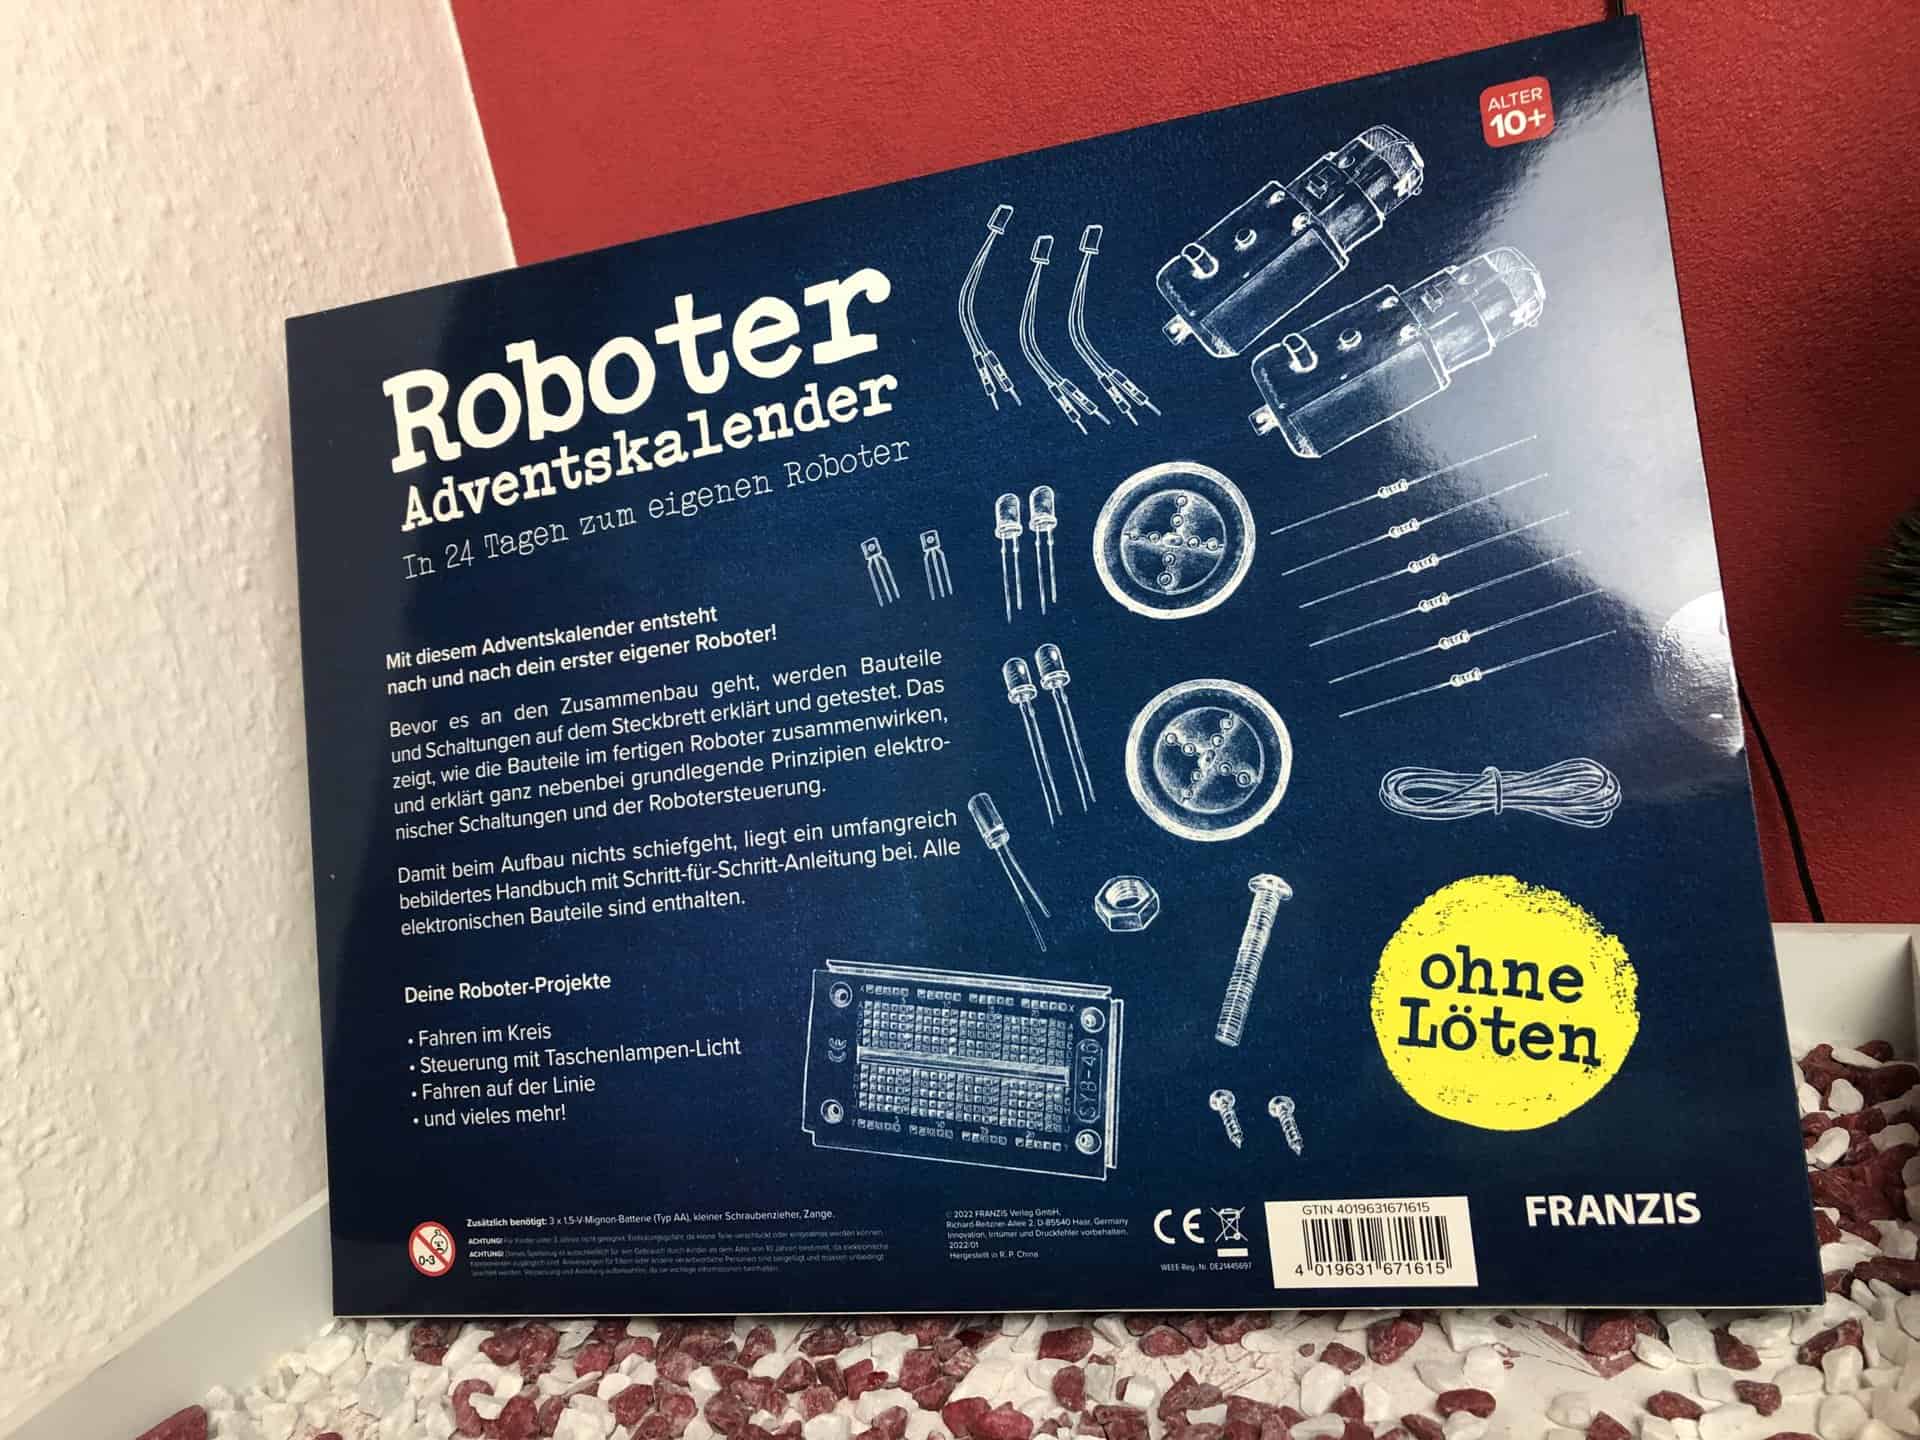 Der Franzis Roboter Adventskalender 